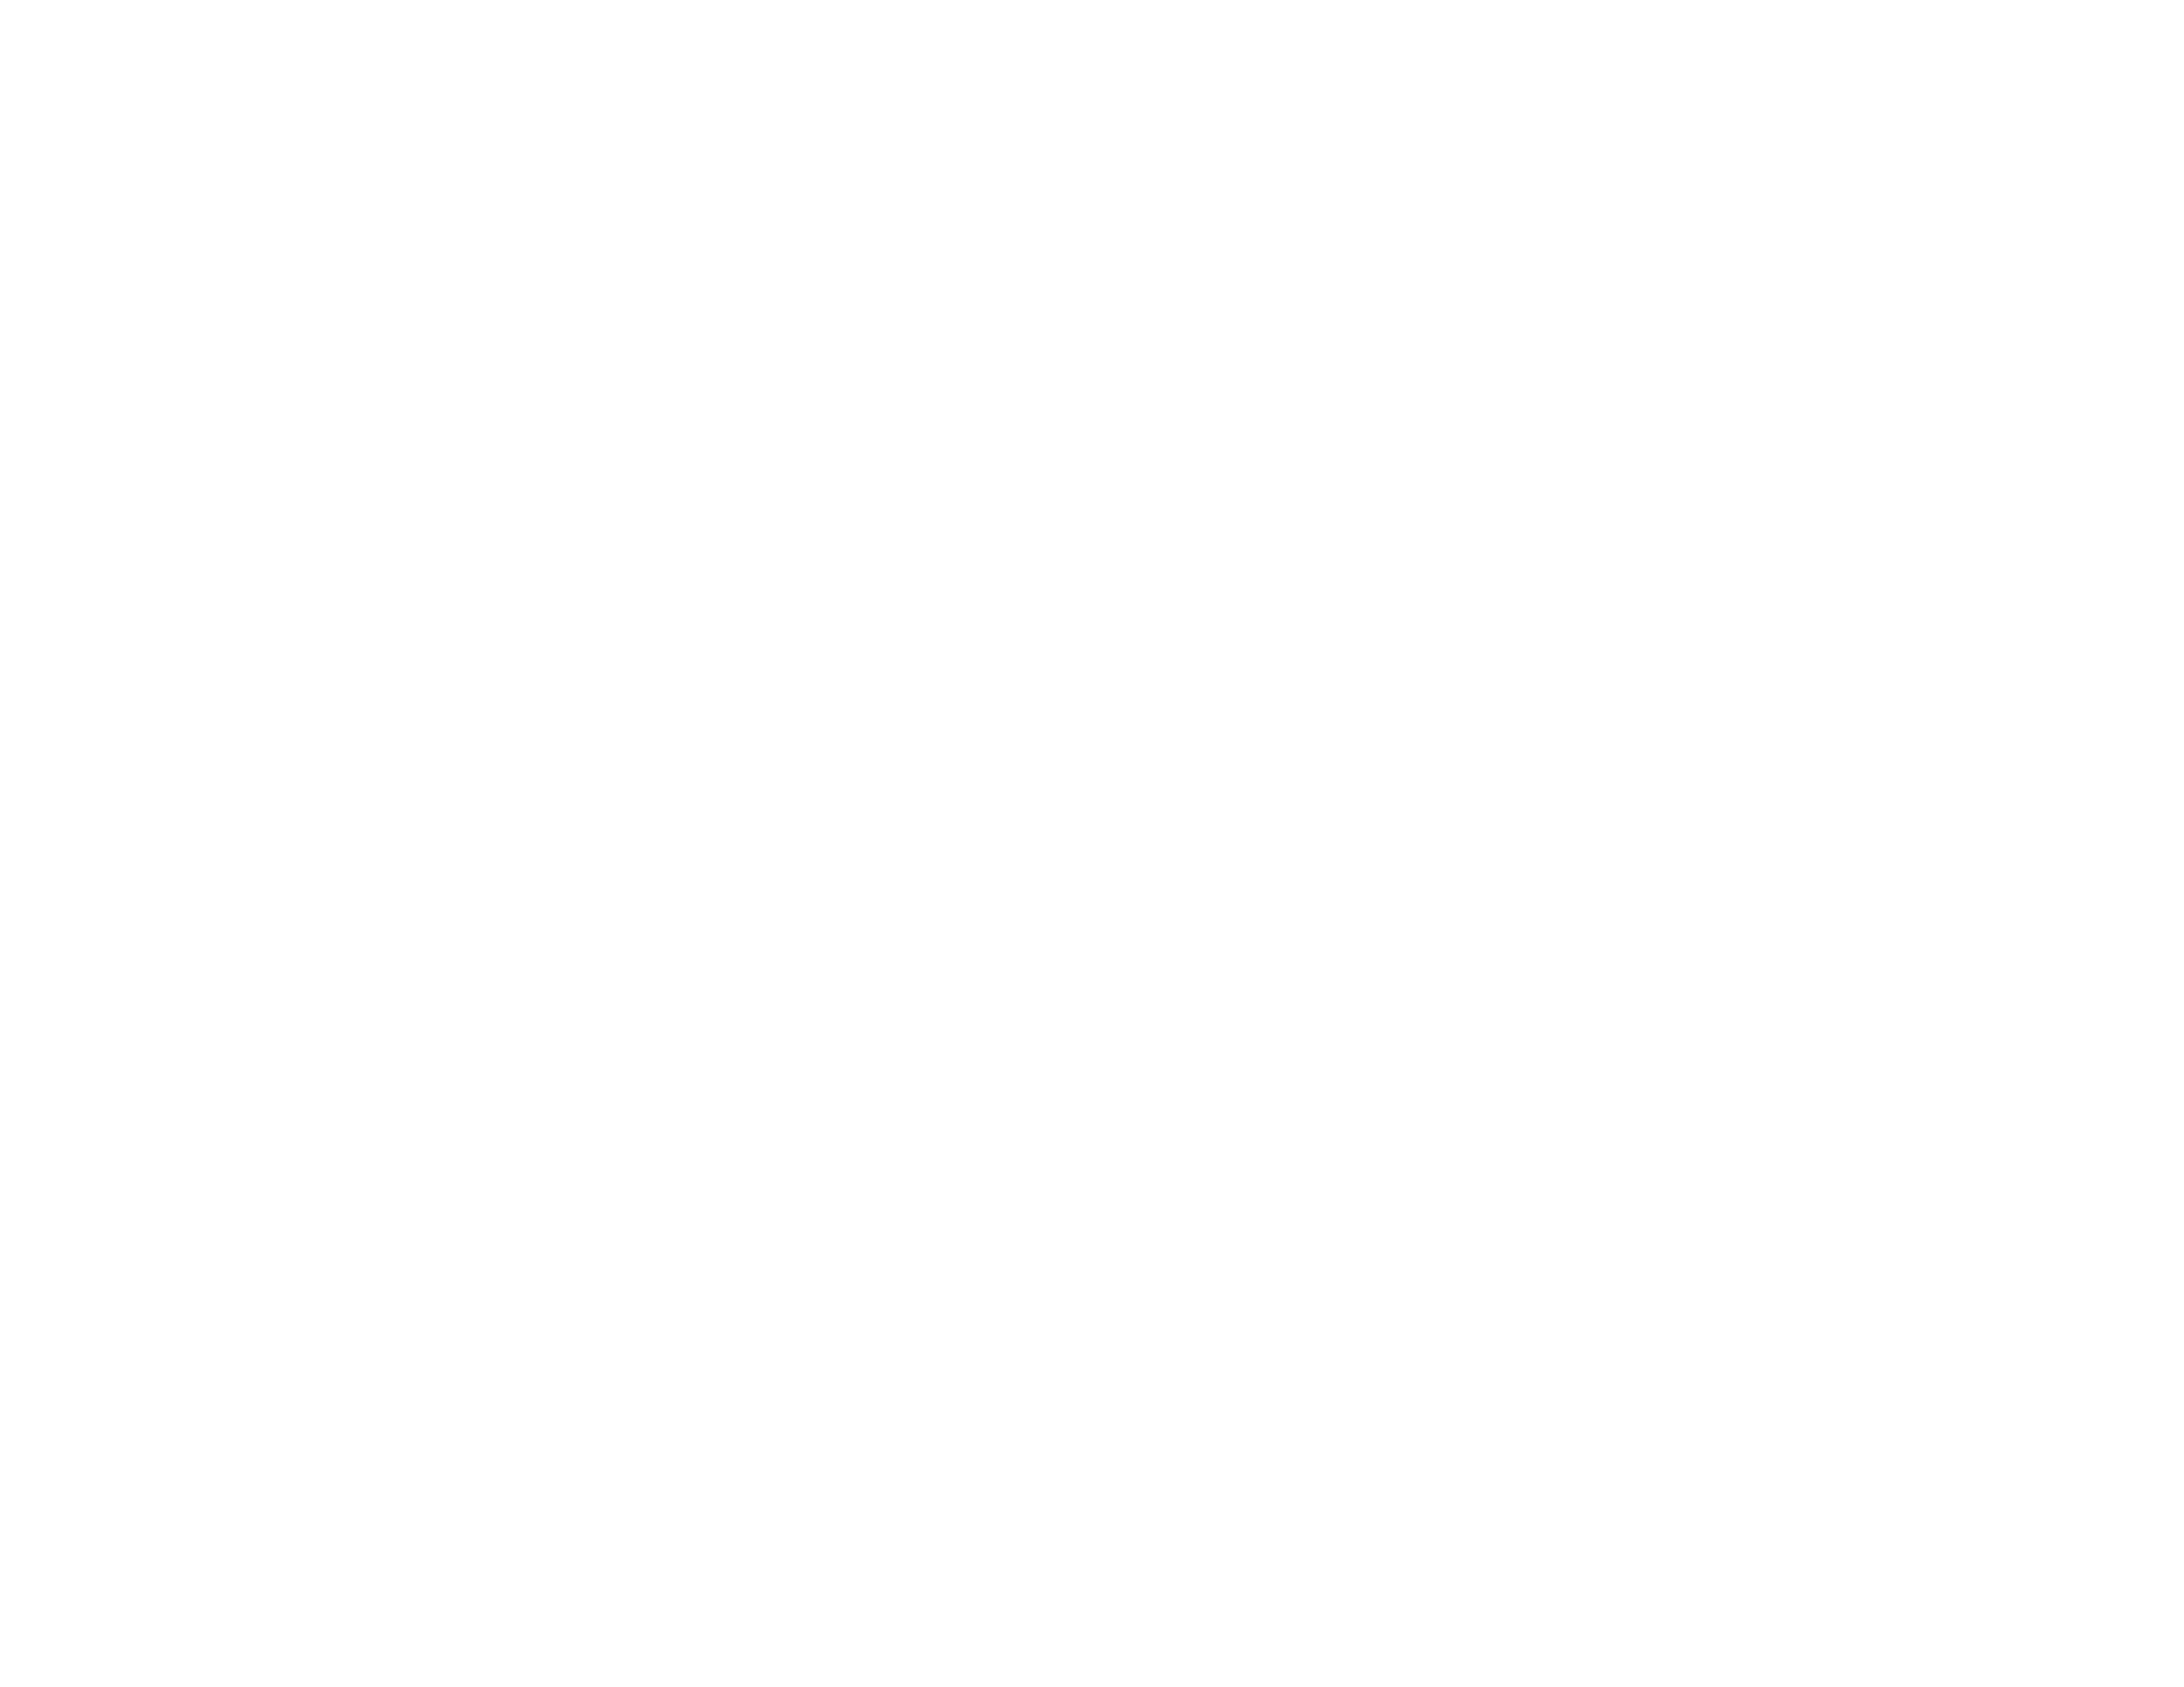 OTV | Open Television